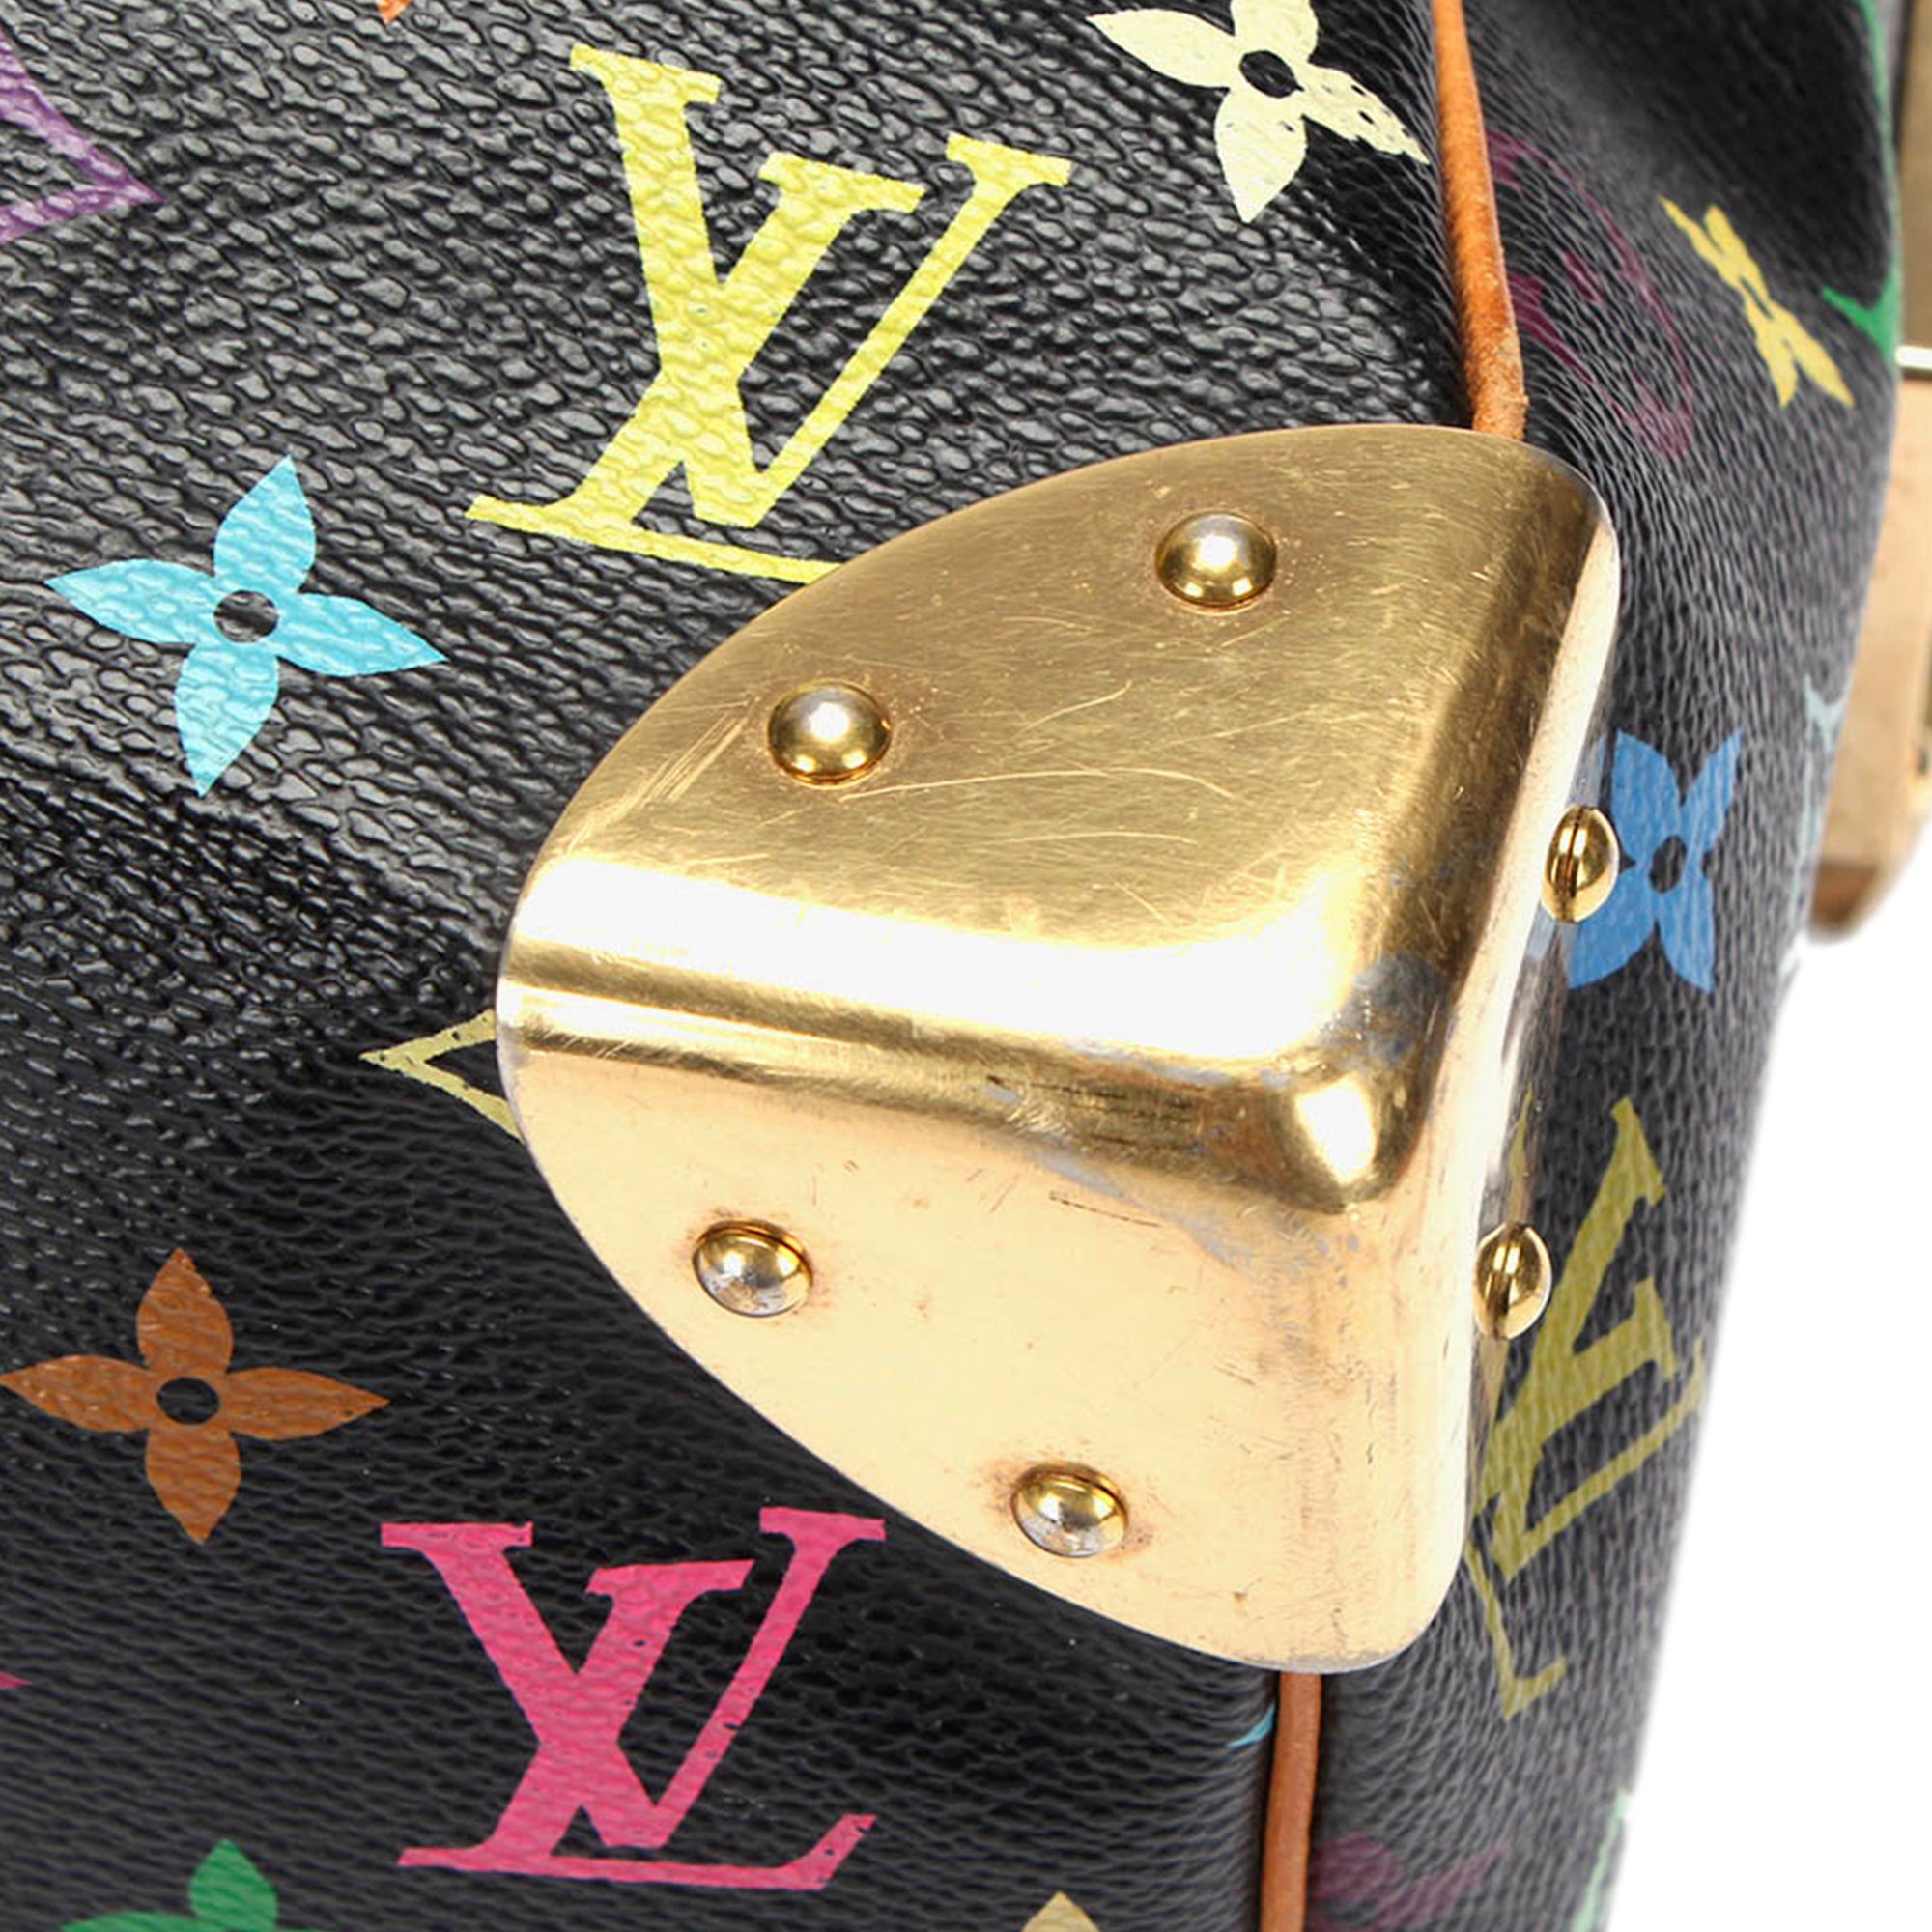 Louis Vuitton Speedy Handbag 267967